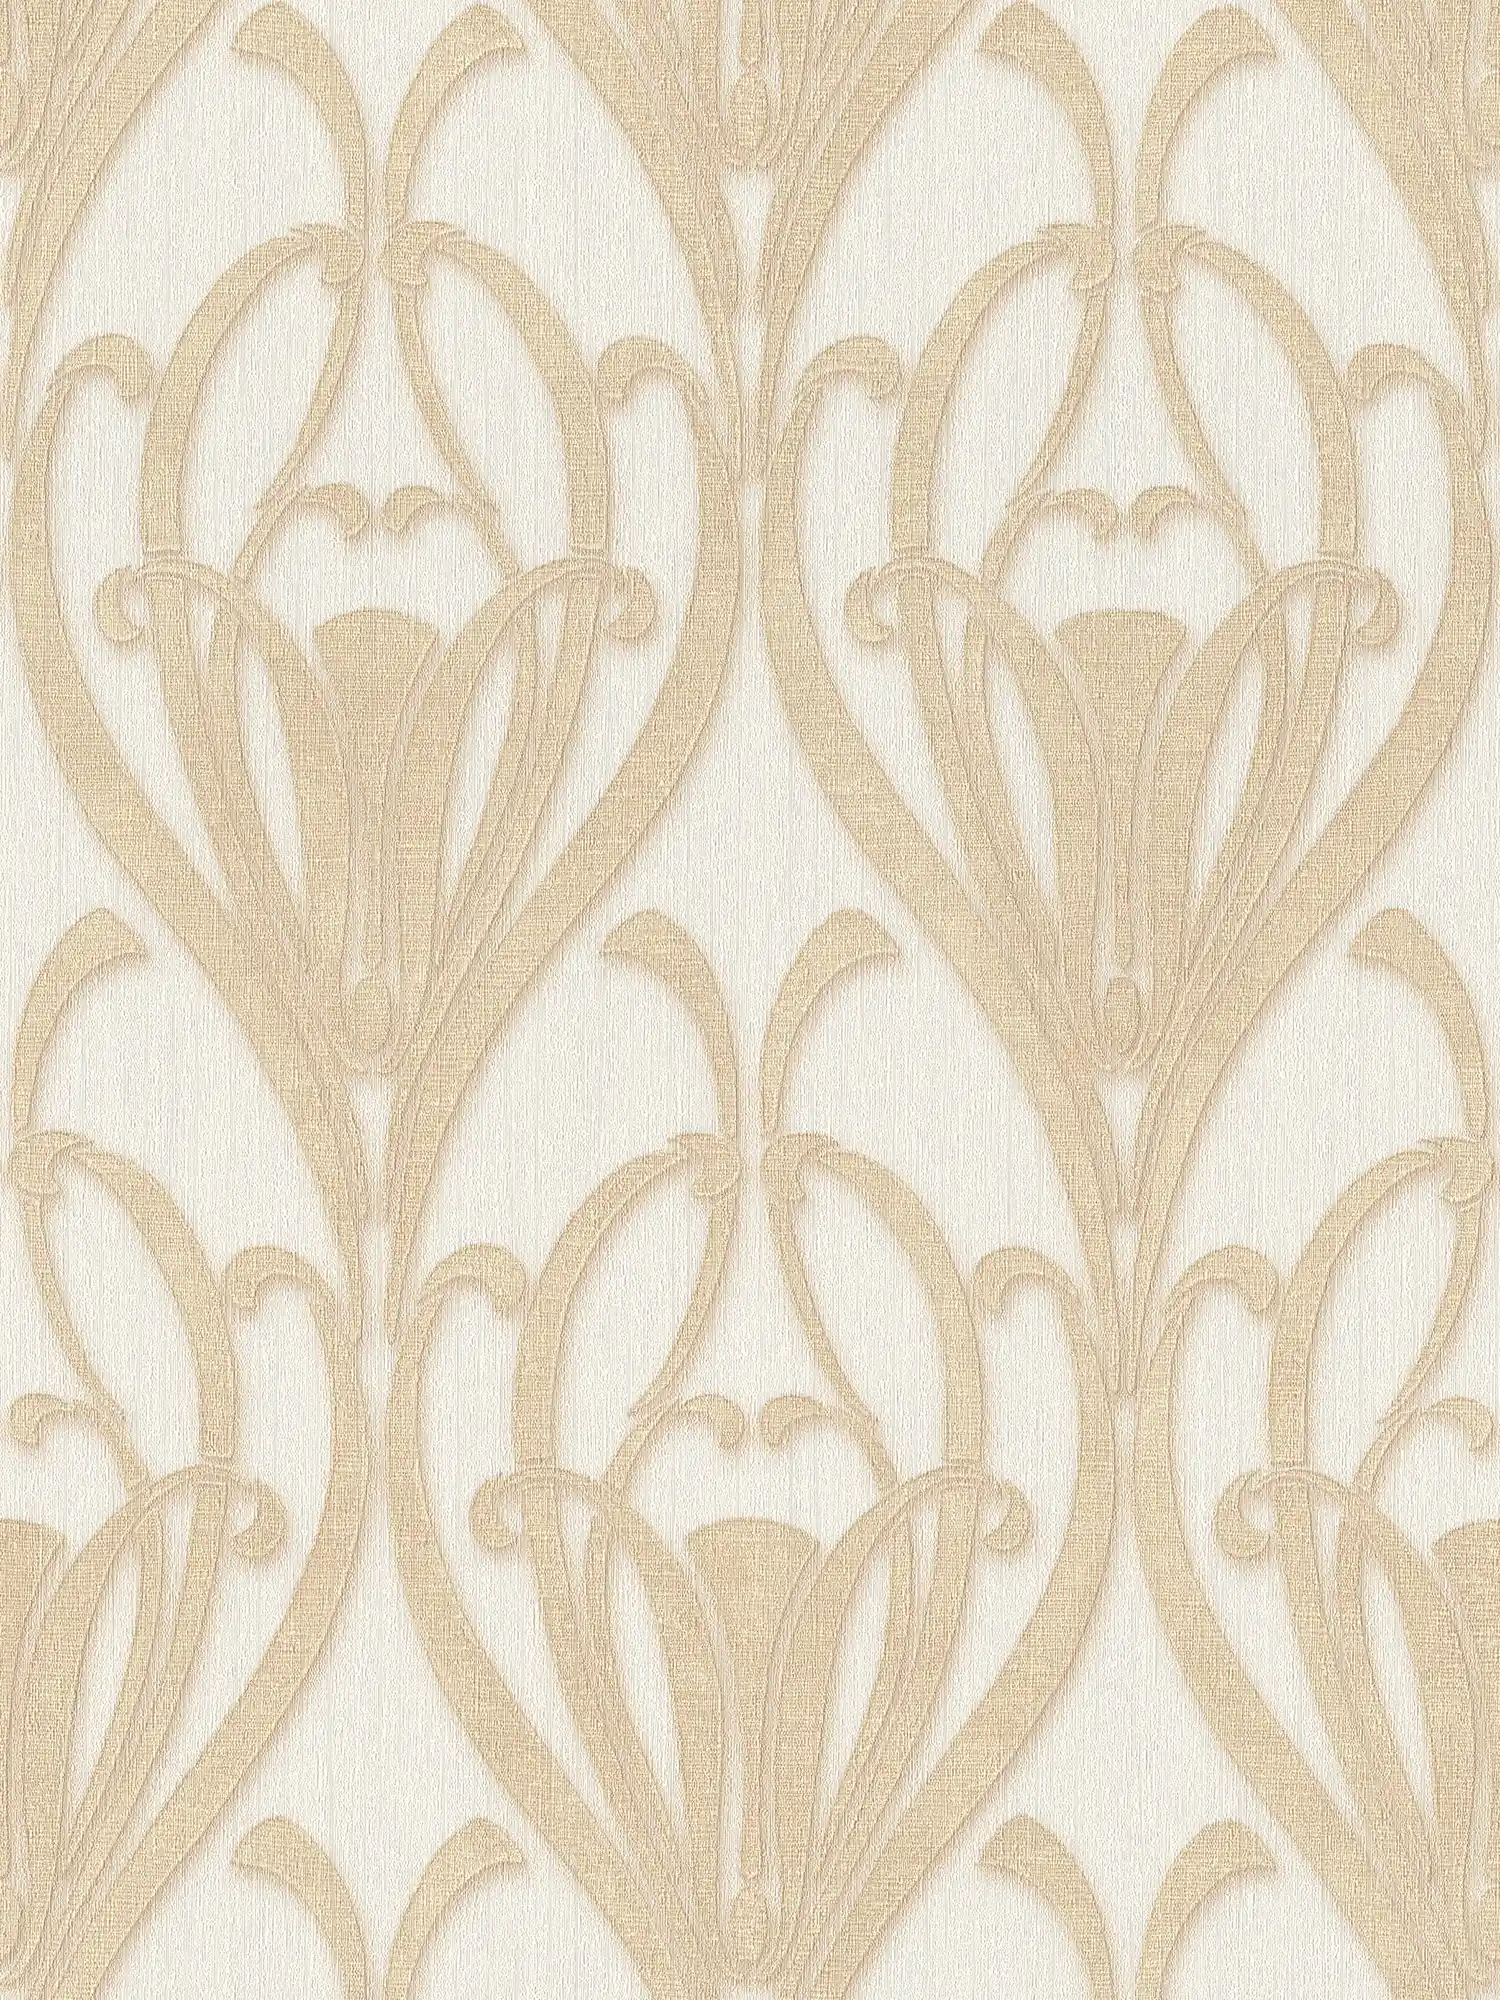         Art Deco Tapete mit goldenem Muster & Textilstruktur
    